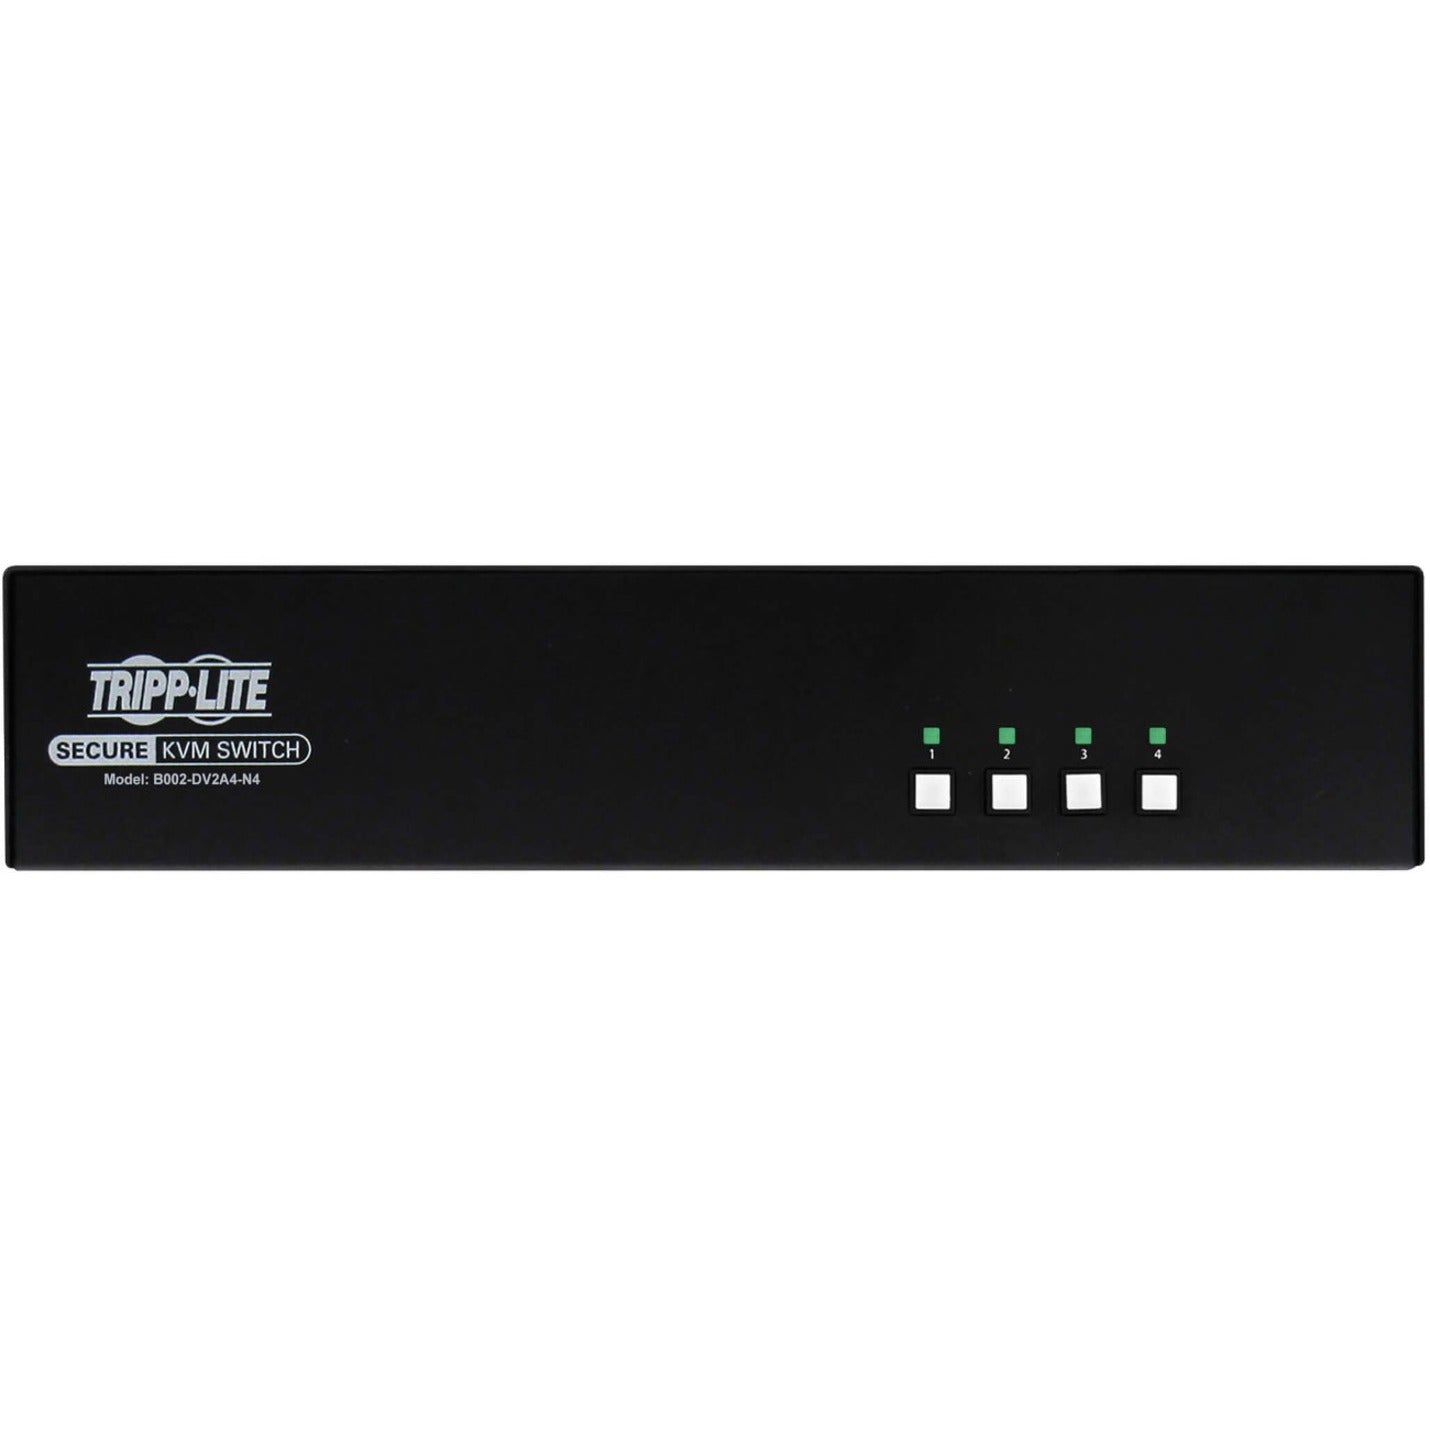 Tripp Lite トリップライト B002-DV2A4-N4 セキュア KVM スイッチ 4 ポート デュアルヘッド DVI to DVI NIAP PP4.0 TAA、 最大ビデオ解像度 2560 x 1600、 3 年保証